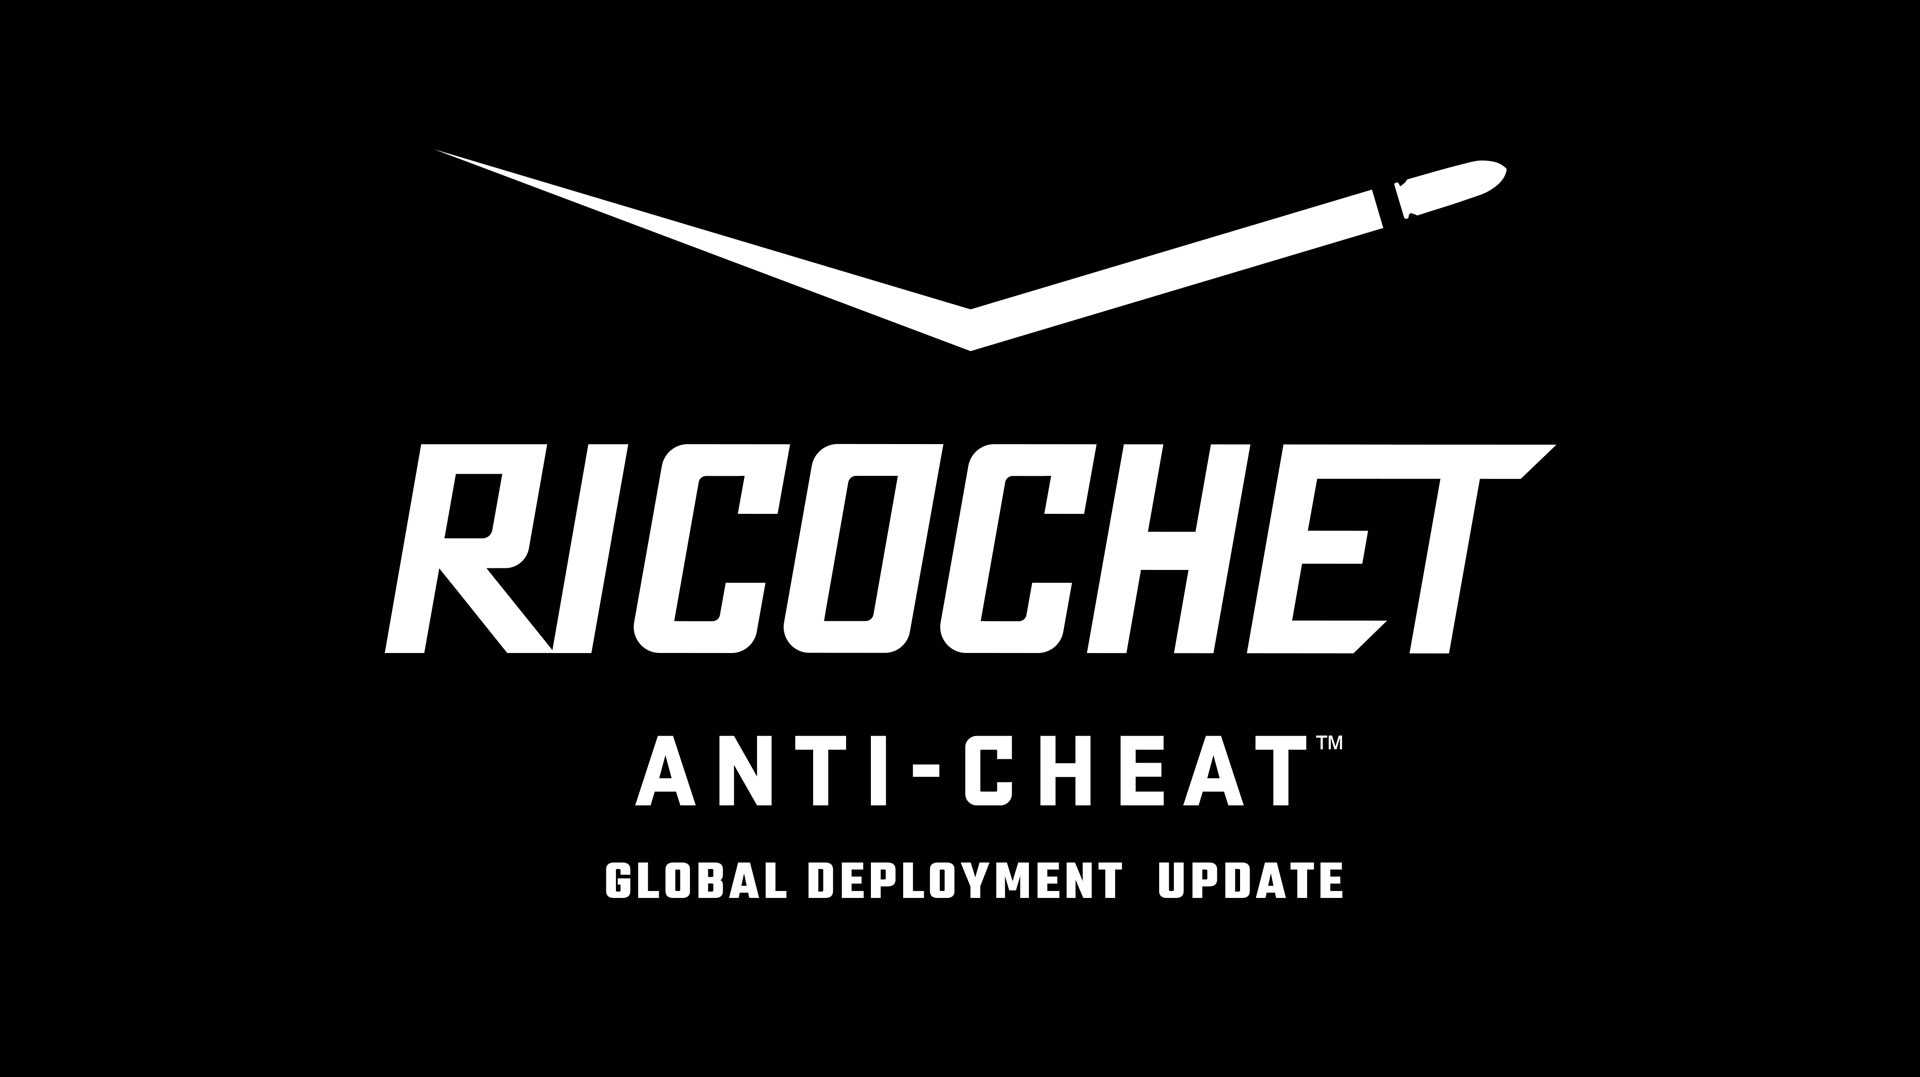 RICOCHET Anti-Cheat™ progress report—Warzone™ PC driver deployment goes global